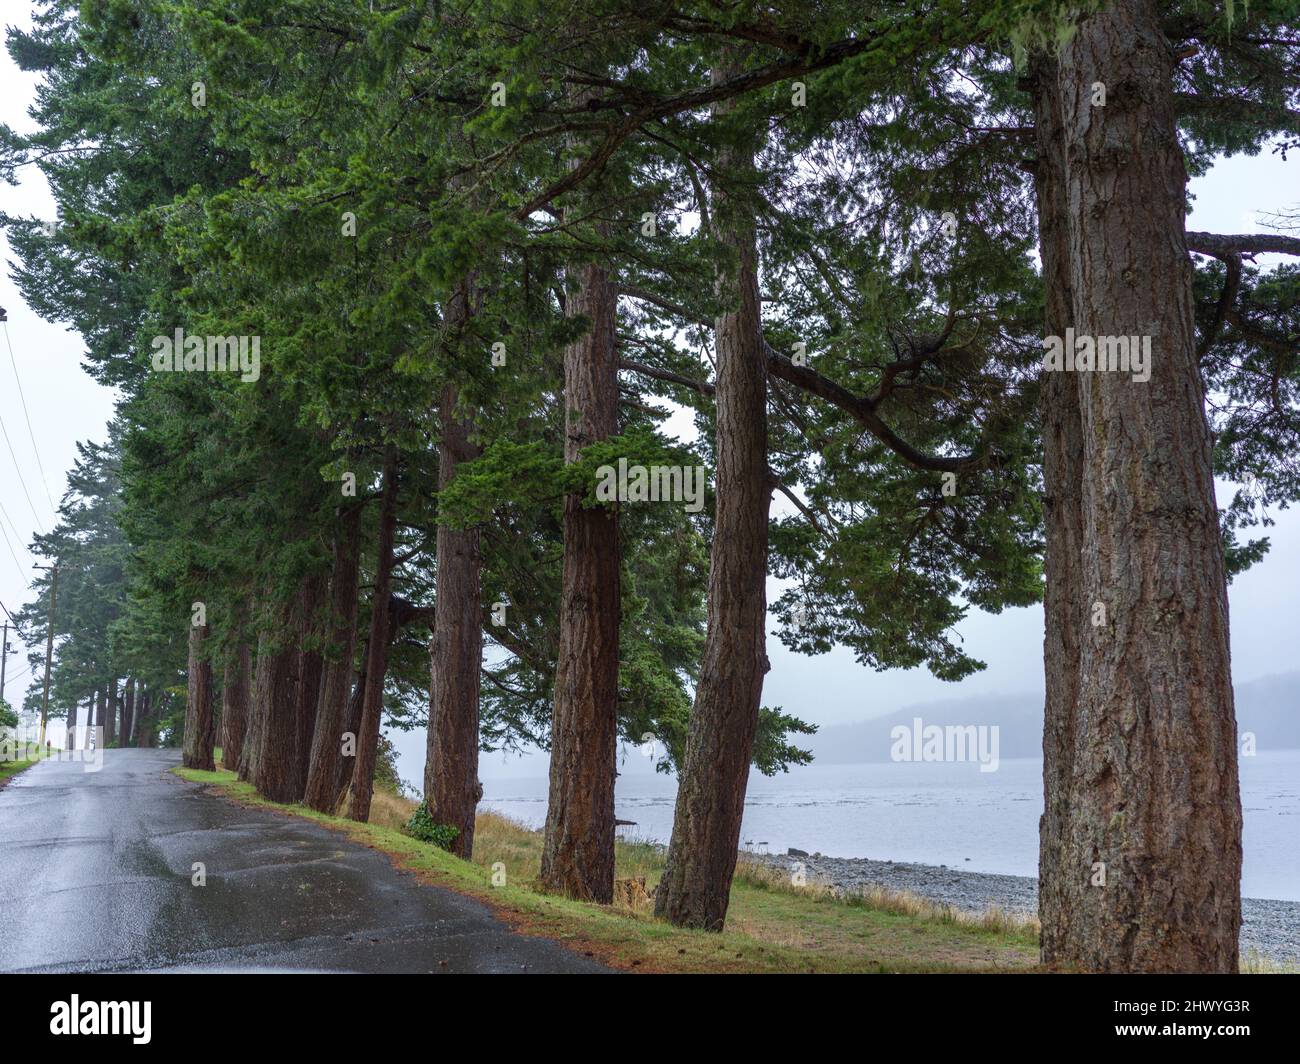 Row of evergreen trees along roadway and shoreline in Village of Alert Bay, Cormorant Island, British Columbia, Vancouver Island, Canada Stock Photo